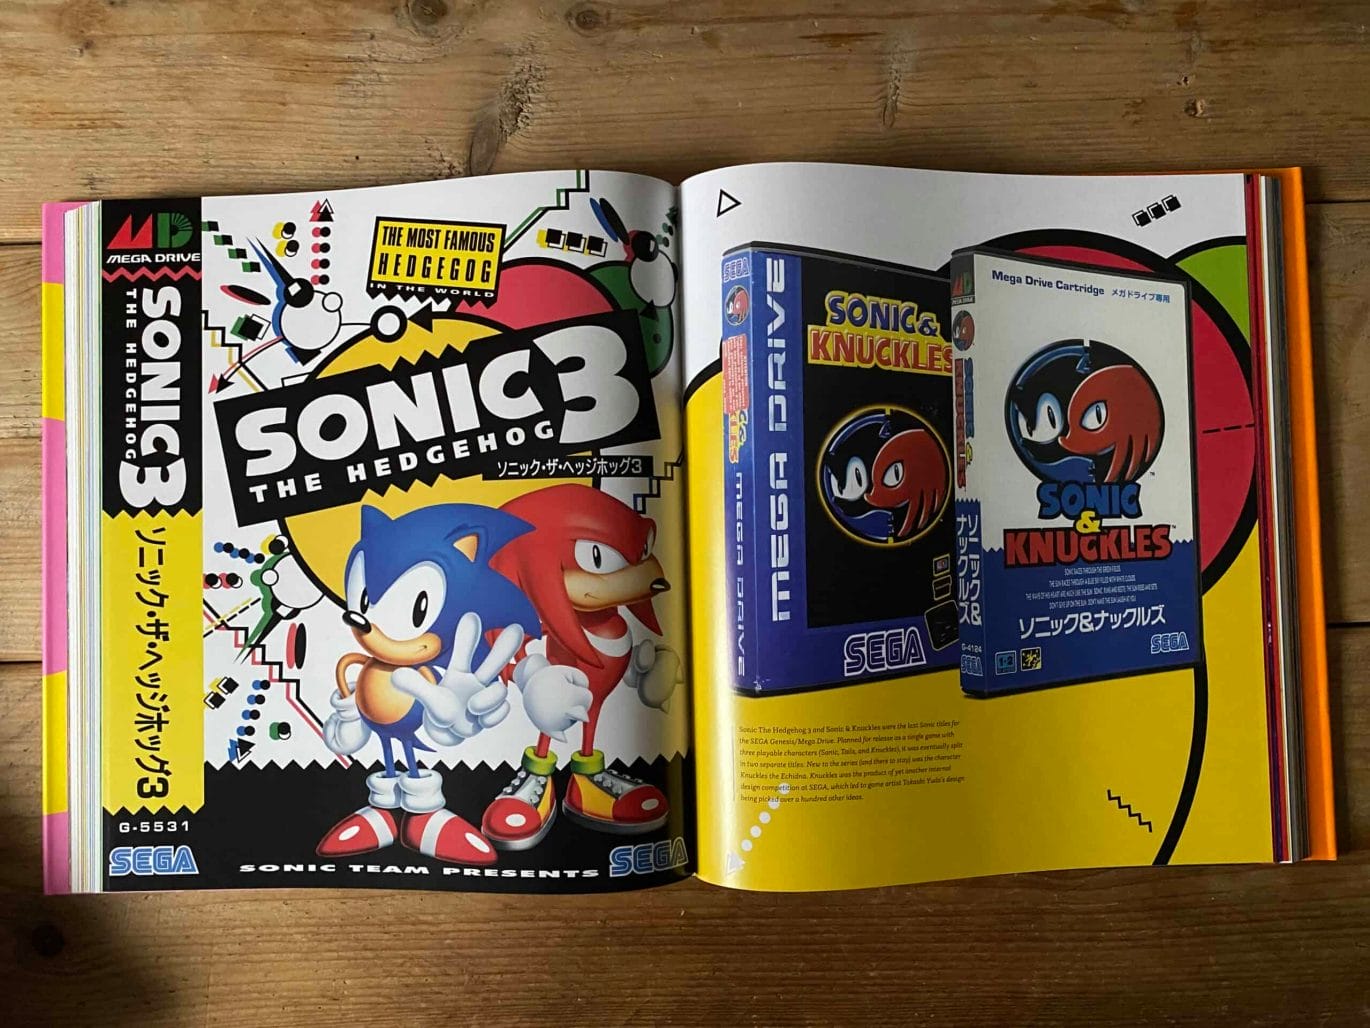 Sonic The Hedgehog 25th Anniversary Art Book